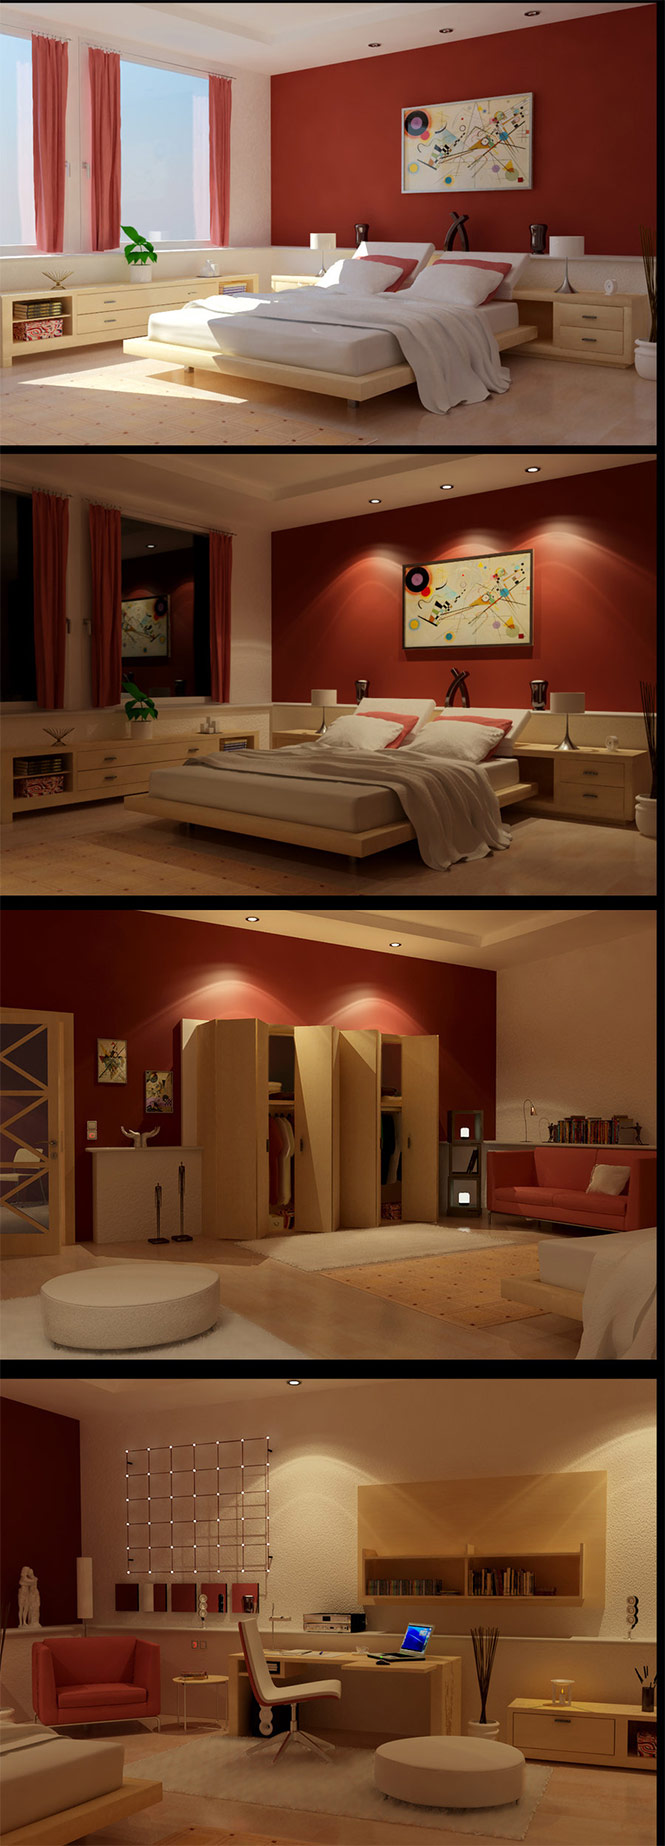 Wood red bedroom design "width =" 665 "height =" 1846 "srcset =" https://mileray.com/wp-content/uploads/2020/05/1588510004_147_Some-Of-The-Beauty-Of-Minimalist-Red-Bedroom-Design-Ideas.jpg 665w, https://mileray.com /wp-content/uploads/2016/07/ZigShot82-1-108x300.jpg 108w, https://mileray.com/wp-content/uploads/2016/07/ZigShot82-1-369x1024.jpg 369w, https: / /mileray.com/wp-content/uploads/2016/07/ZigShot82-1-151x420.jpg 151w "Sizes =" (maximum width: 665px) 100vw, 665px